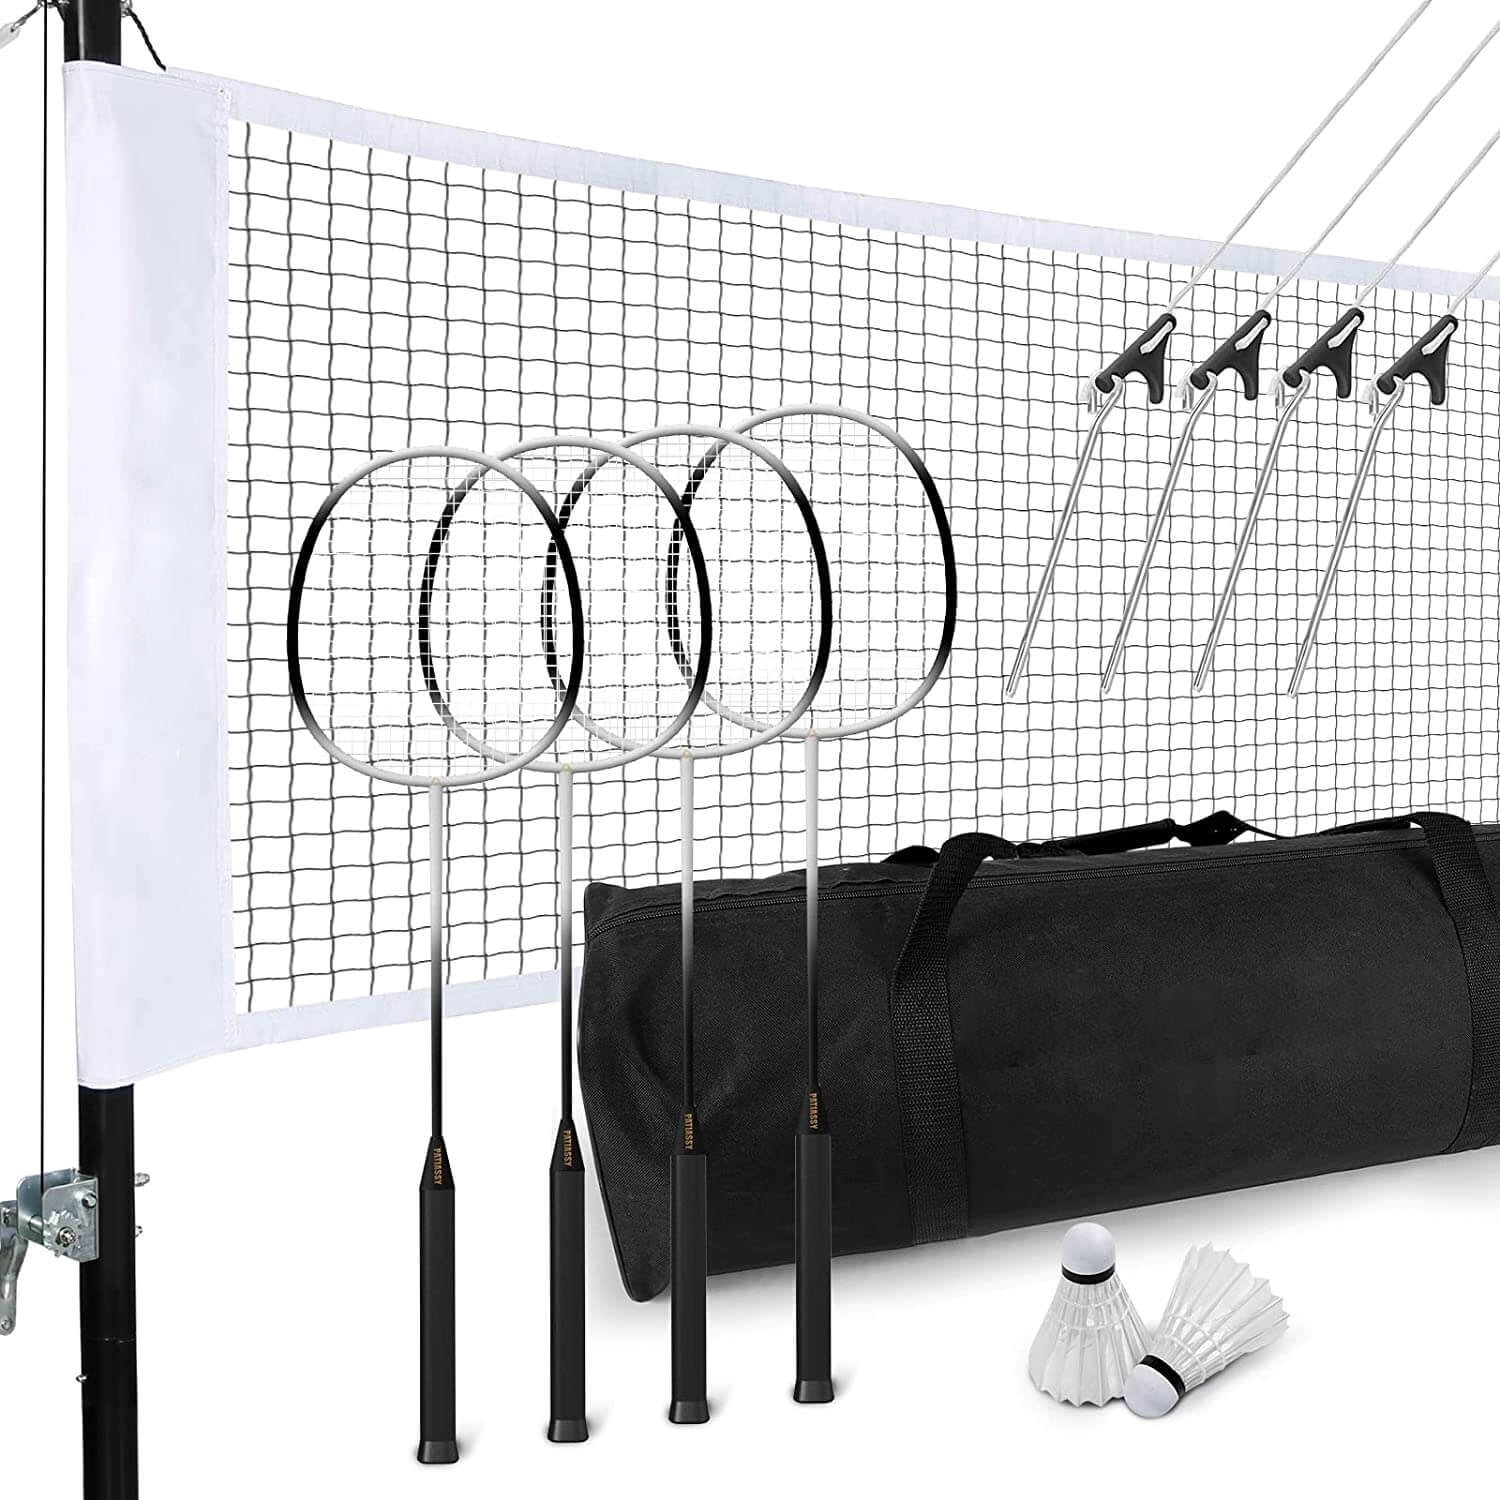 Portable Badminton Set with Professional Badminton Net